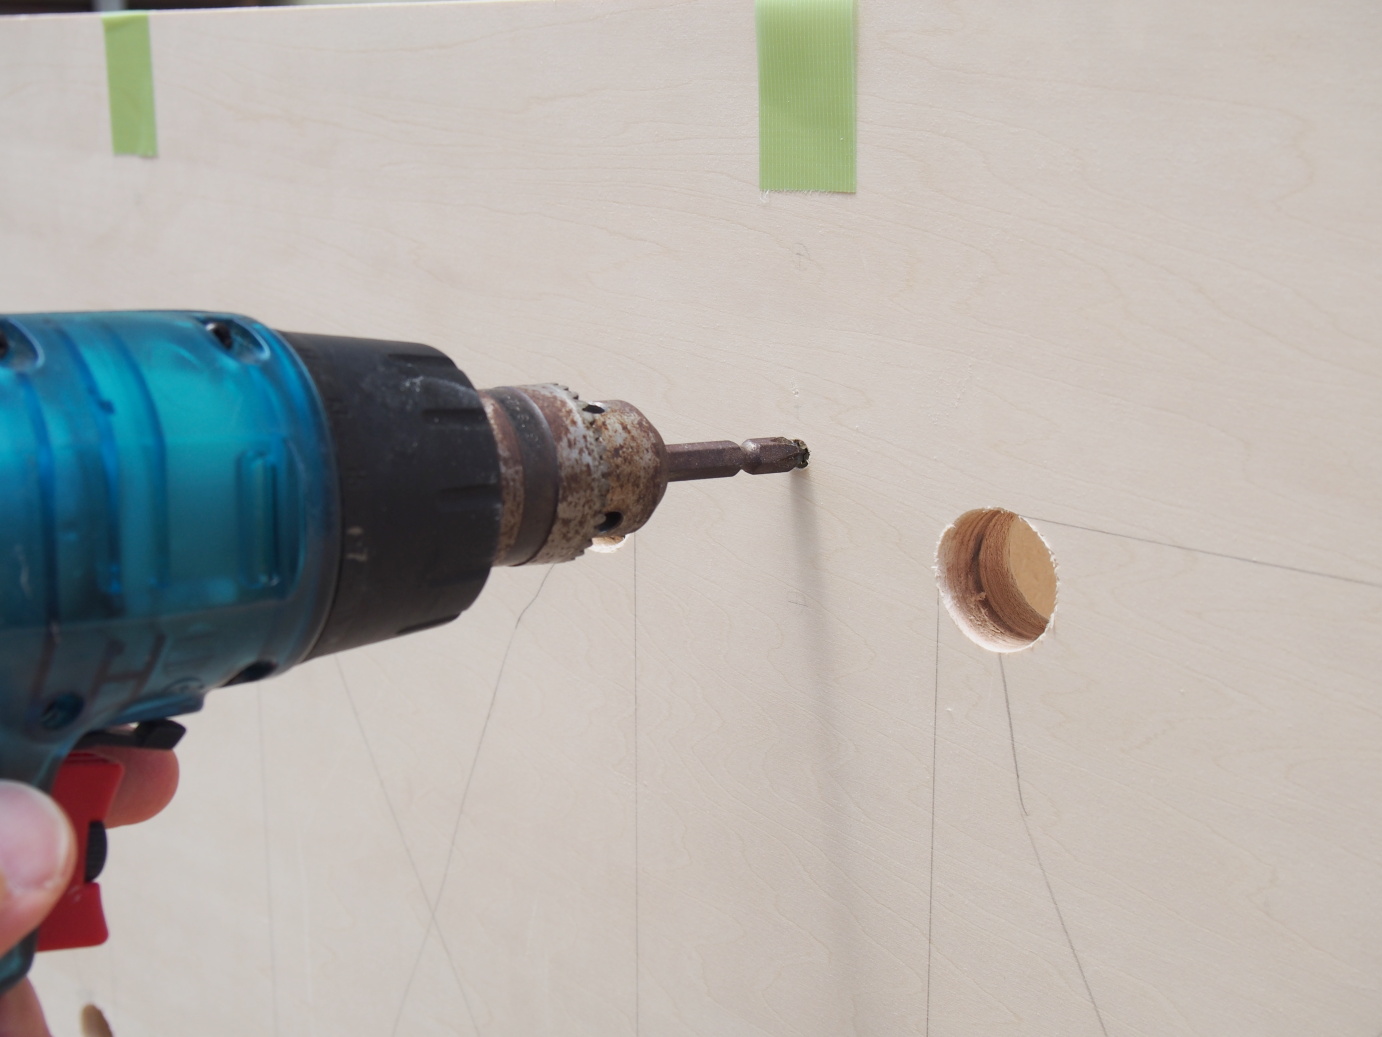 6. Tightening the wood screw